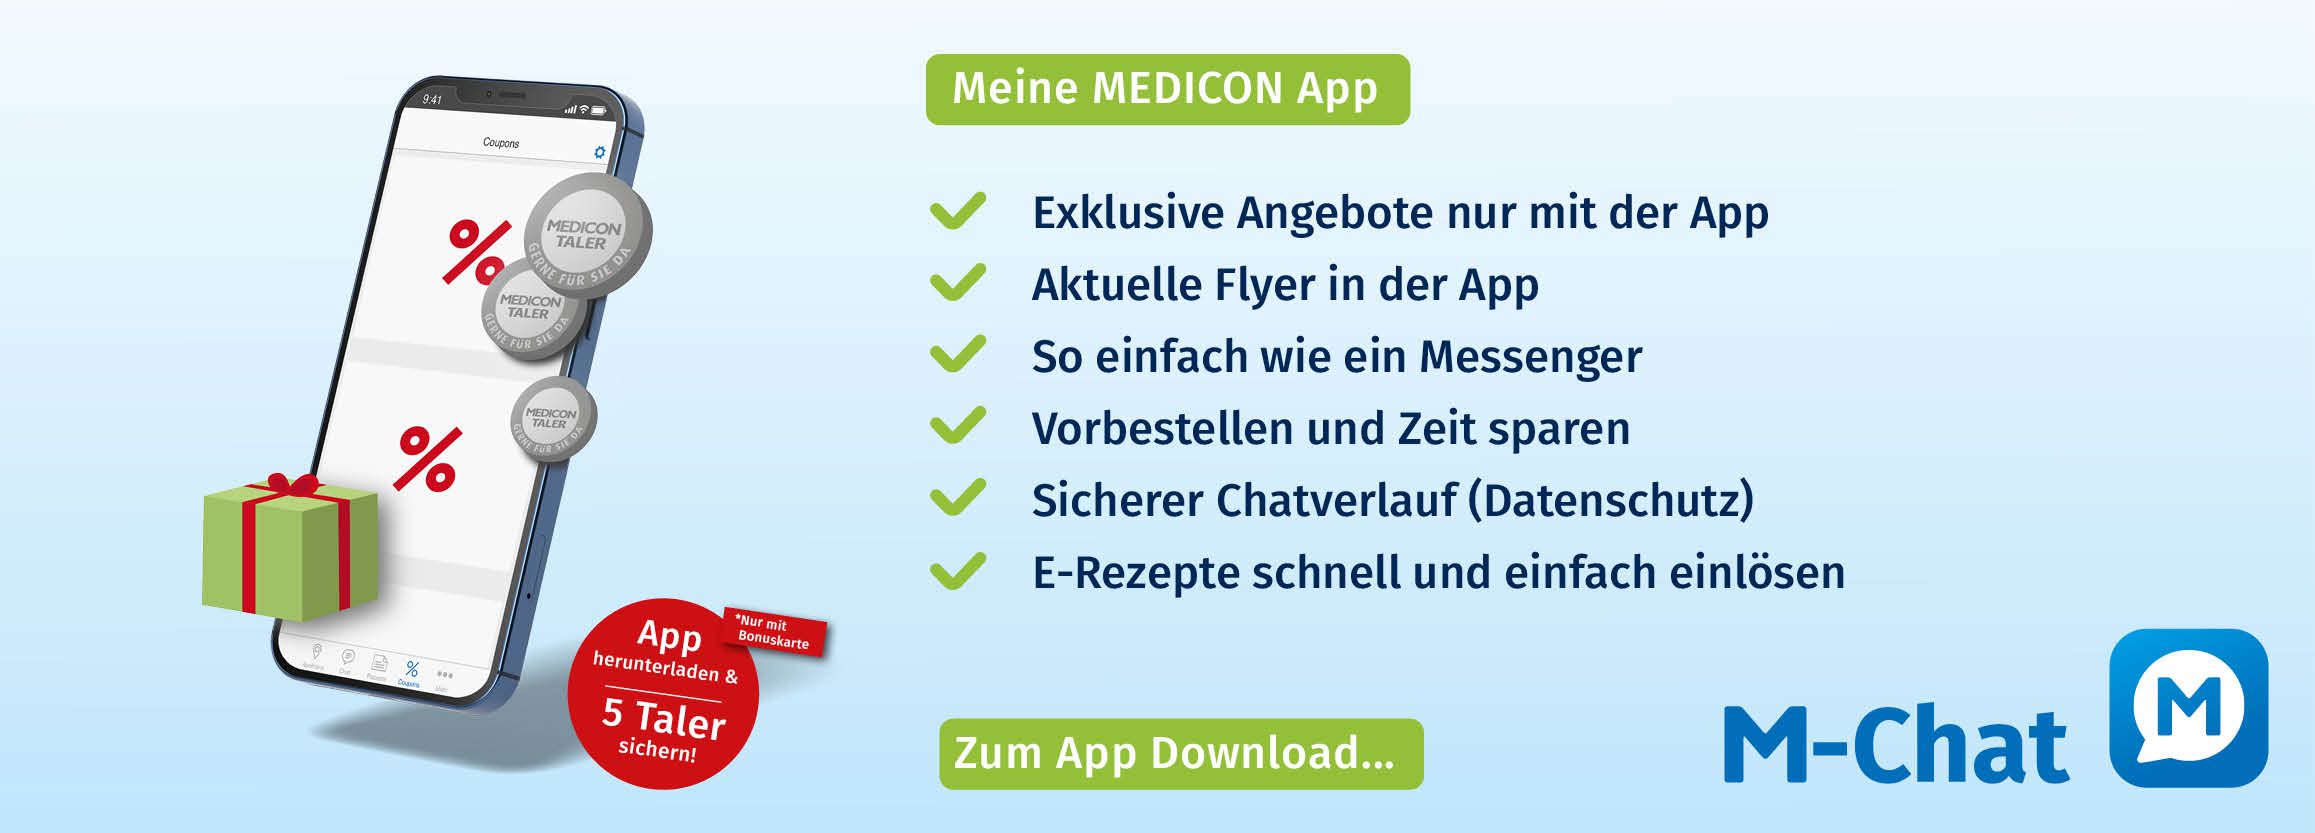 Die MEDICON Apotheken App